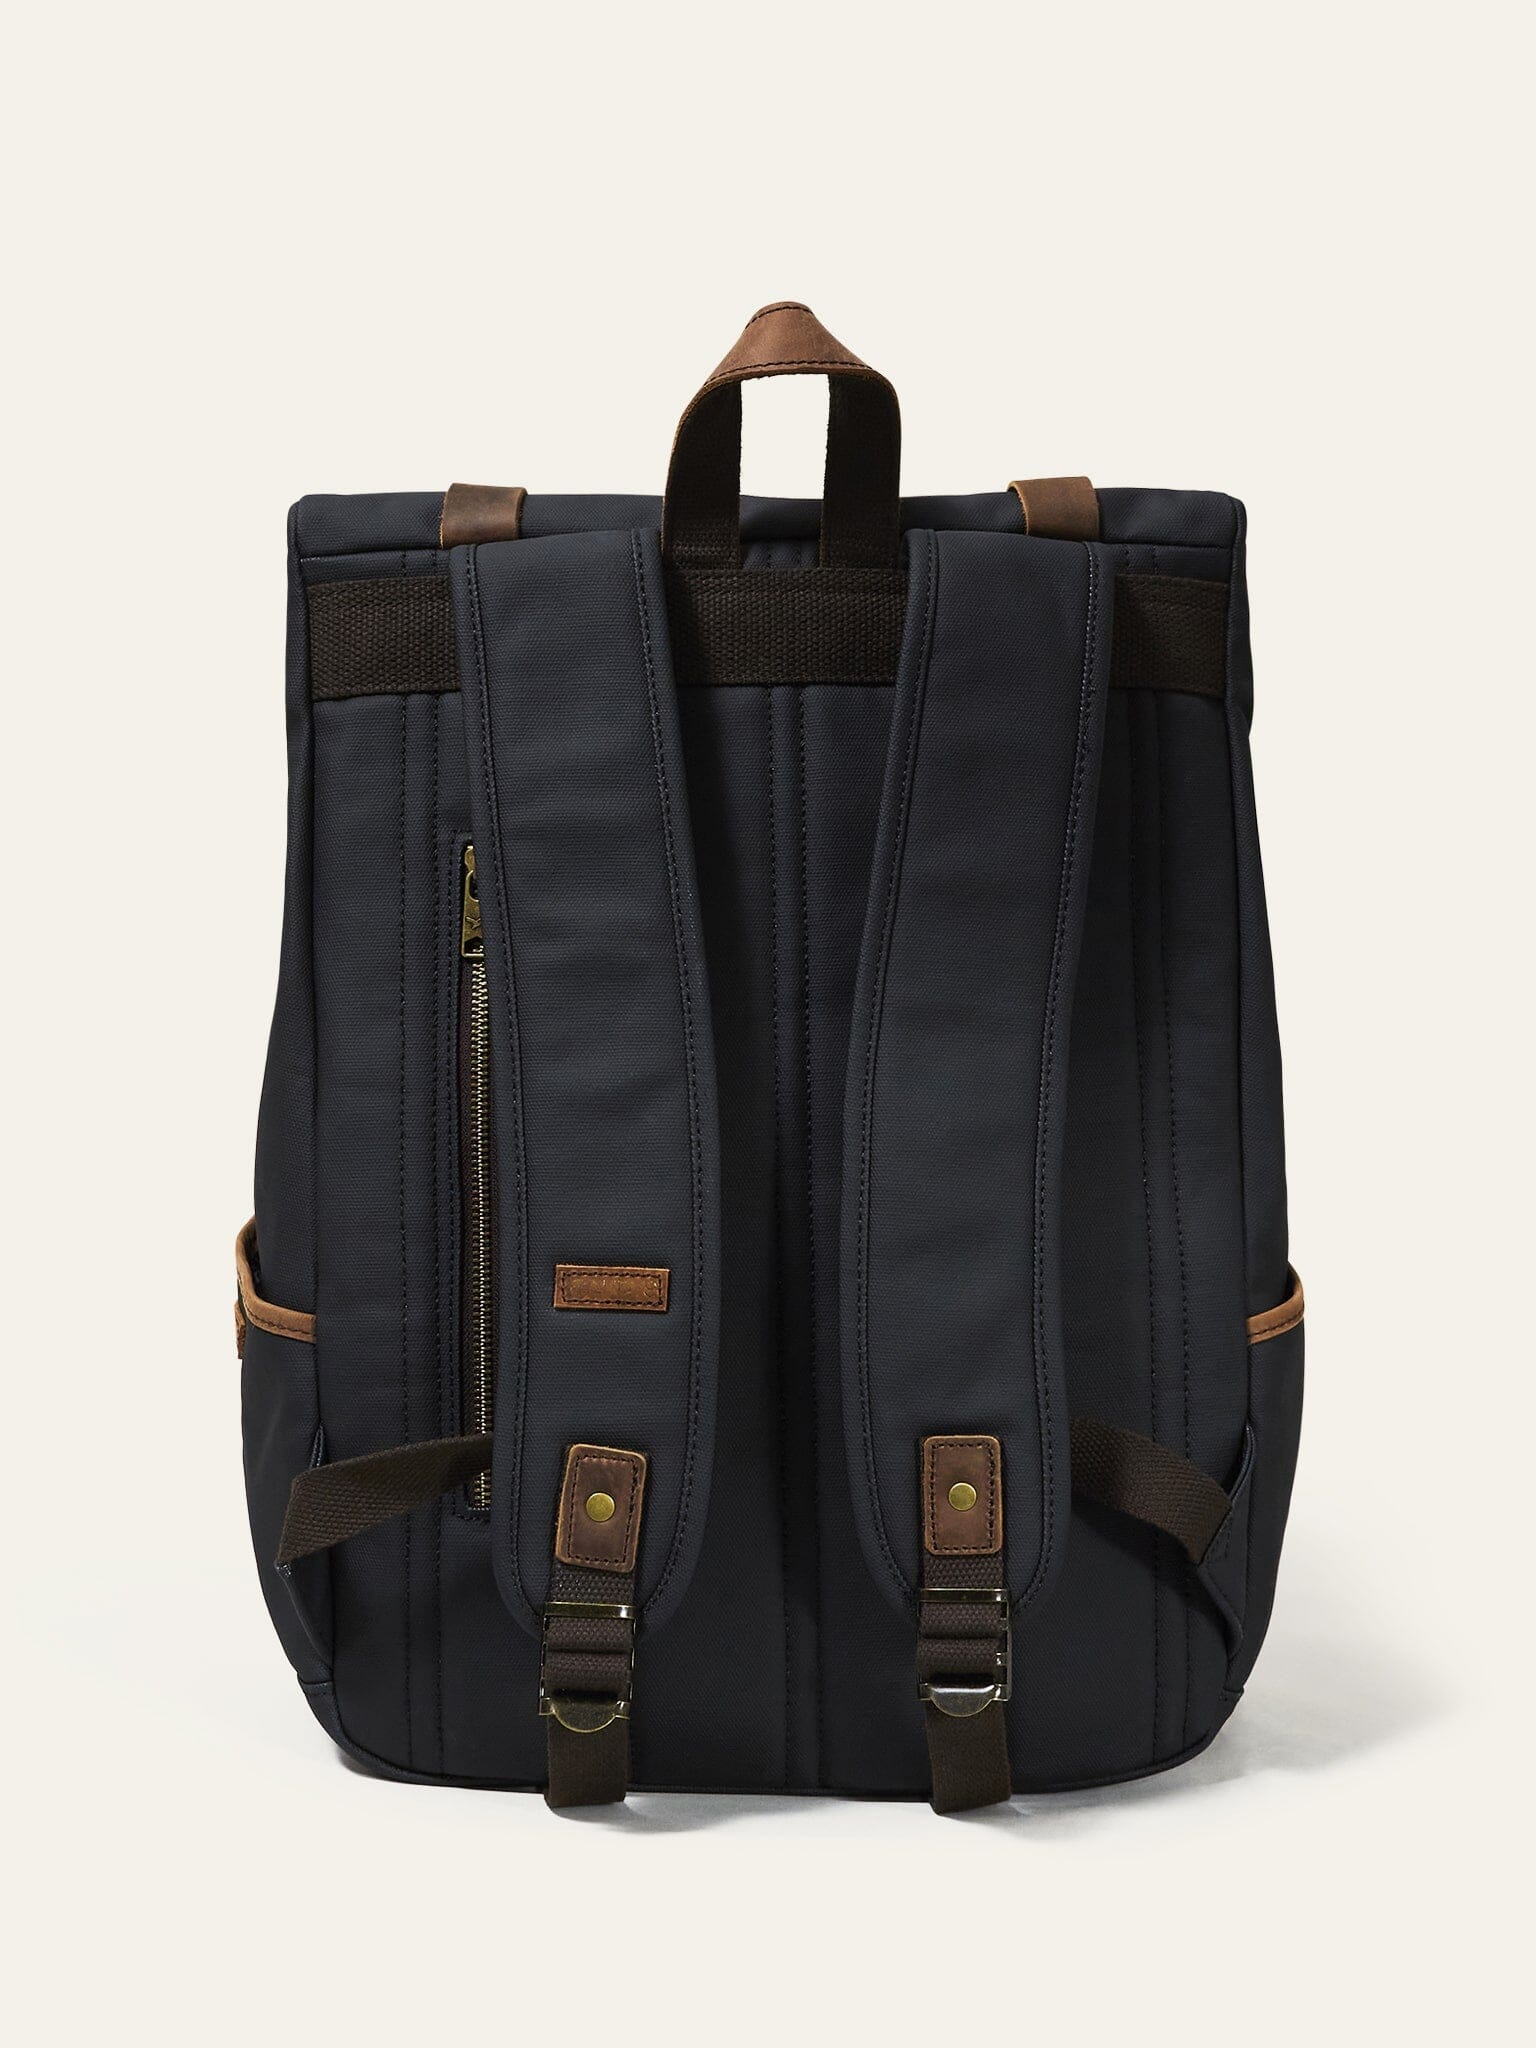 matte-black-authentic-bali-backpack-177218_b9a406fd-02e5-4d36-a0ee-8813ed2a36f1.jpg